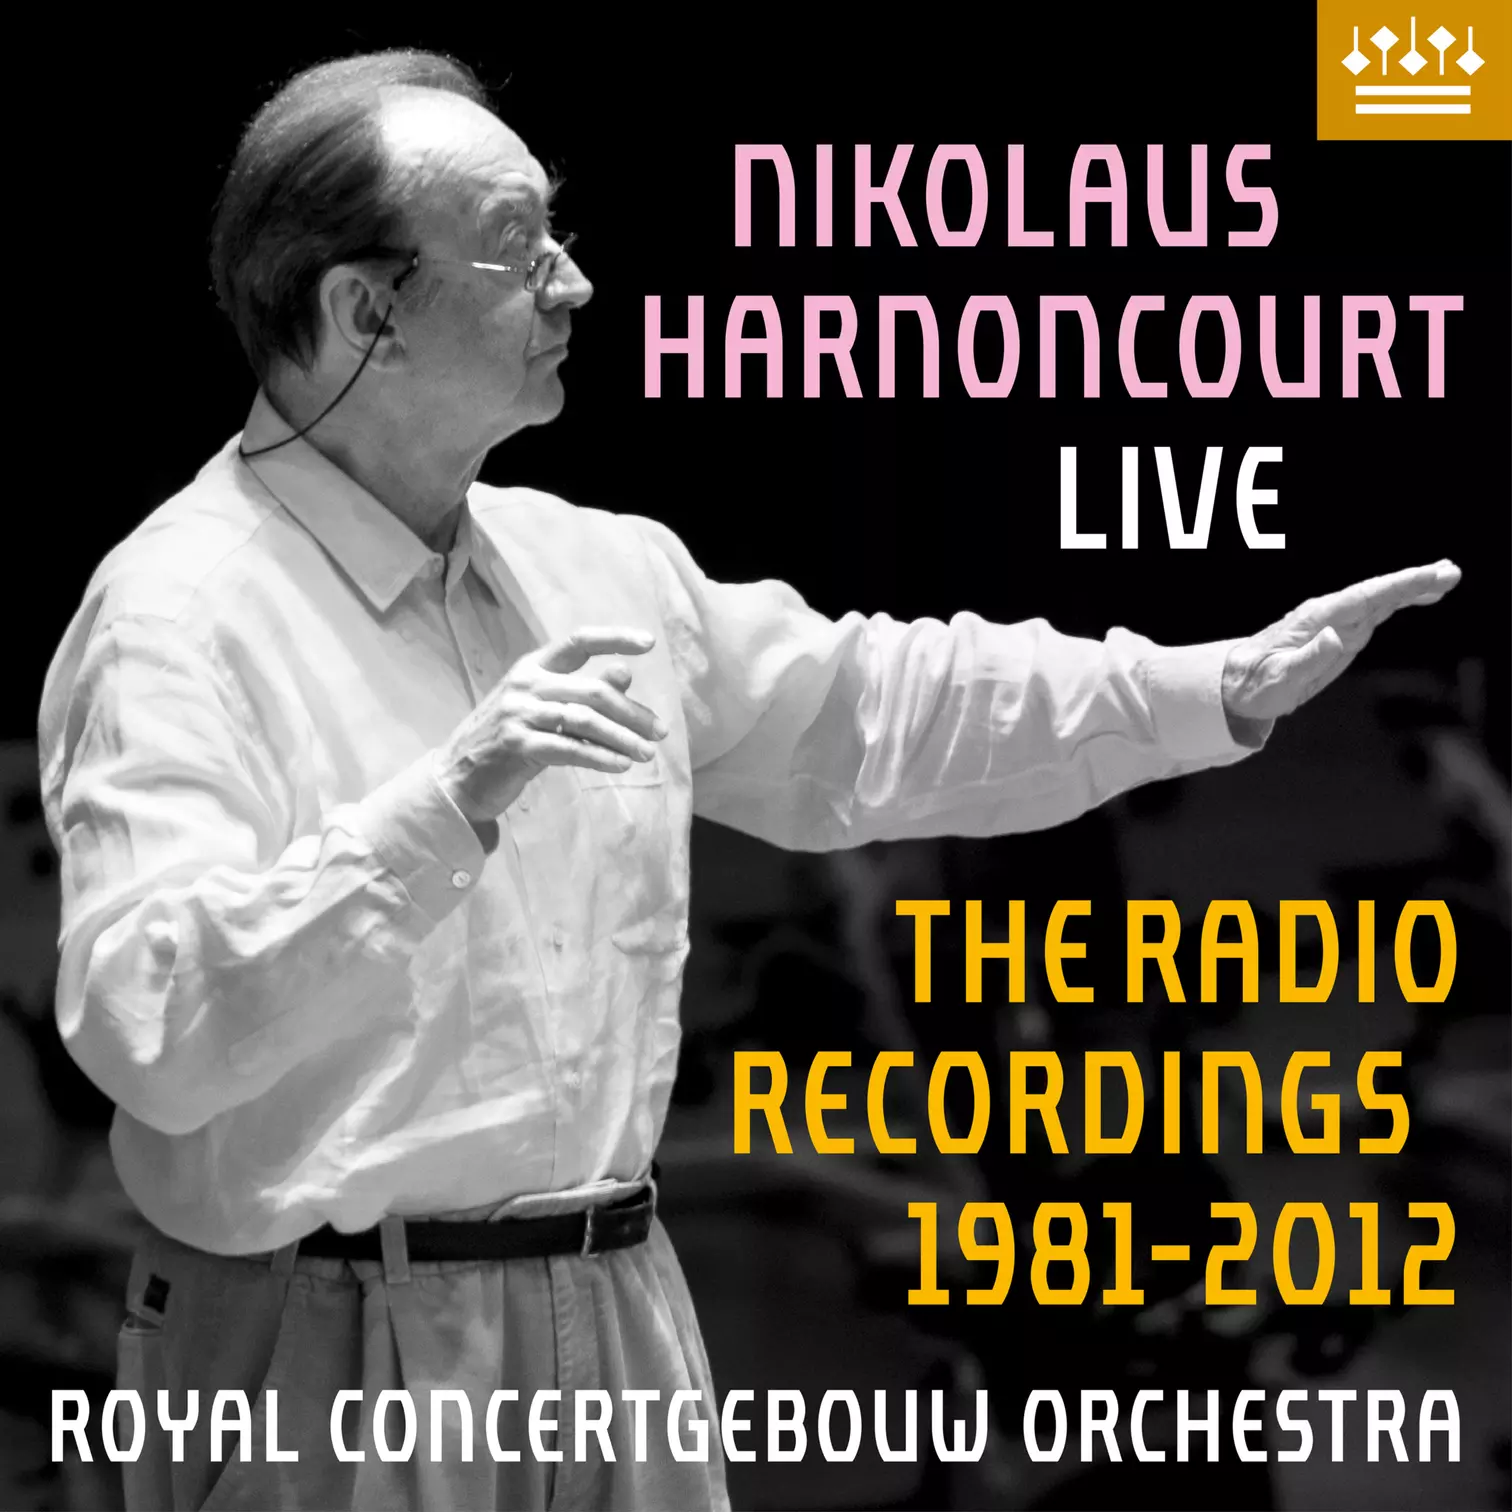 Nikolaus Harnoncourt Live The Radio Recordings 1981-2012 Royal Concertgebouw Orchestra